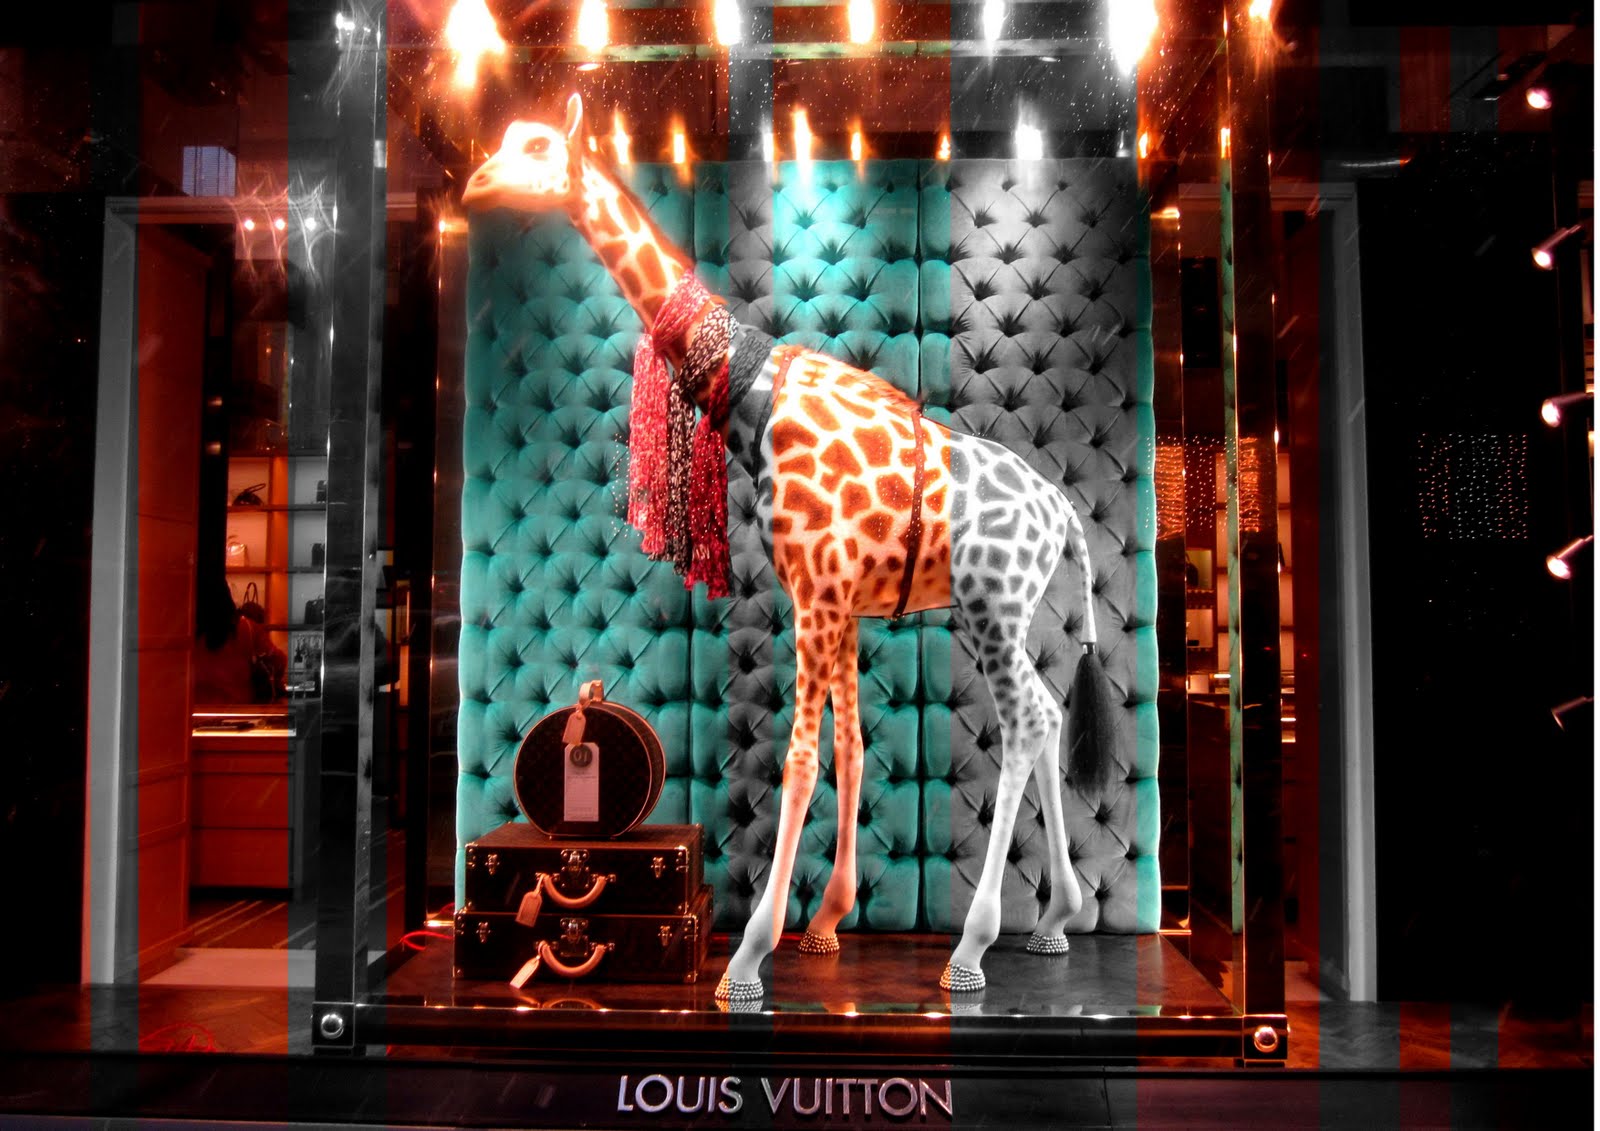 www.paulmartinsmith.com Louis Vuitton - NY Window Display